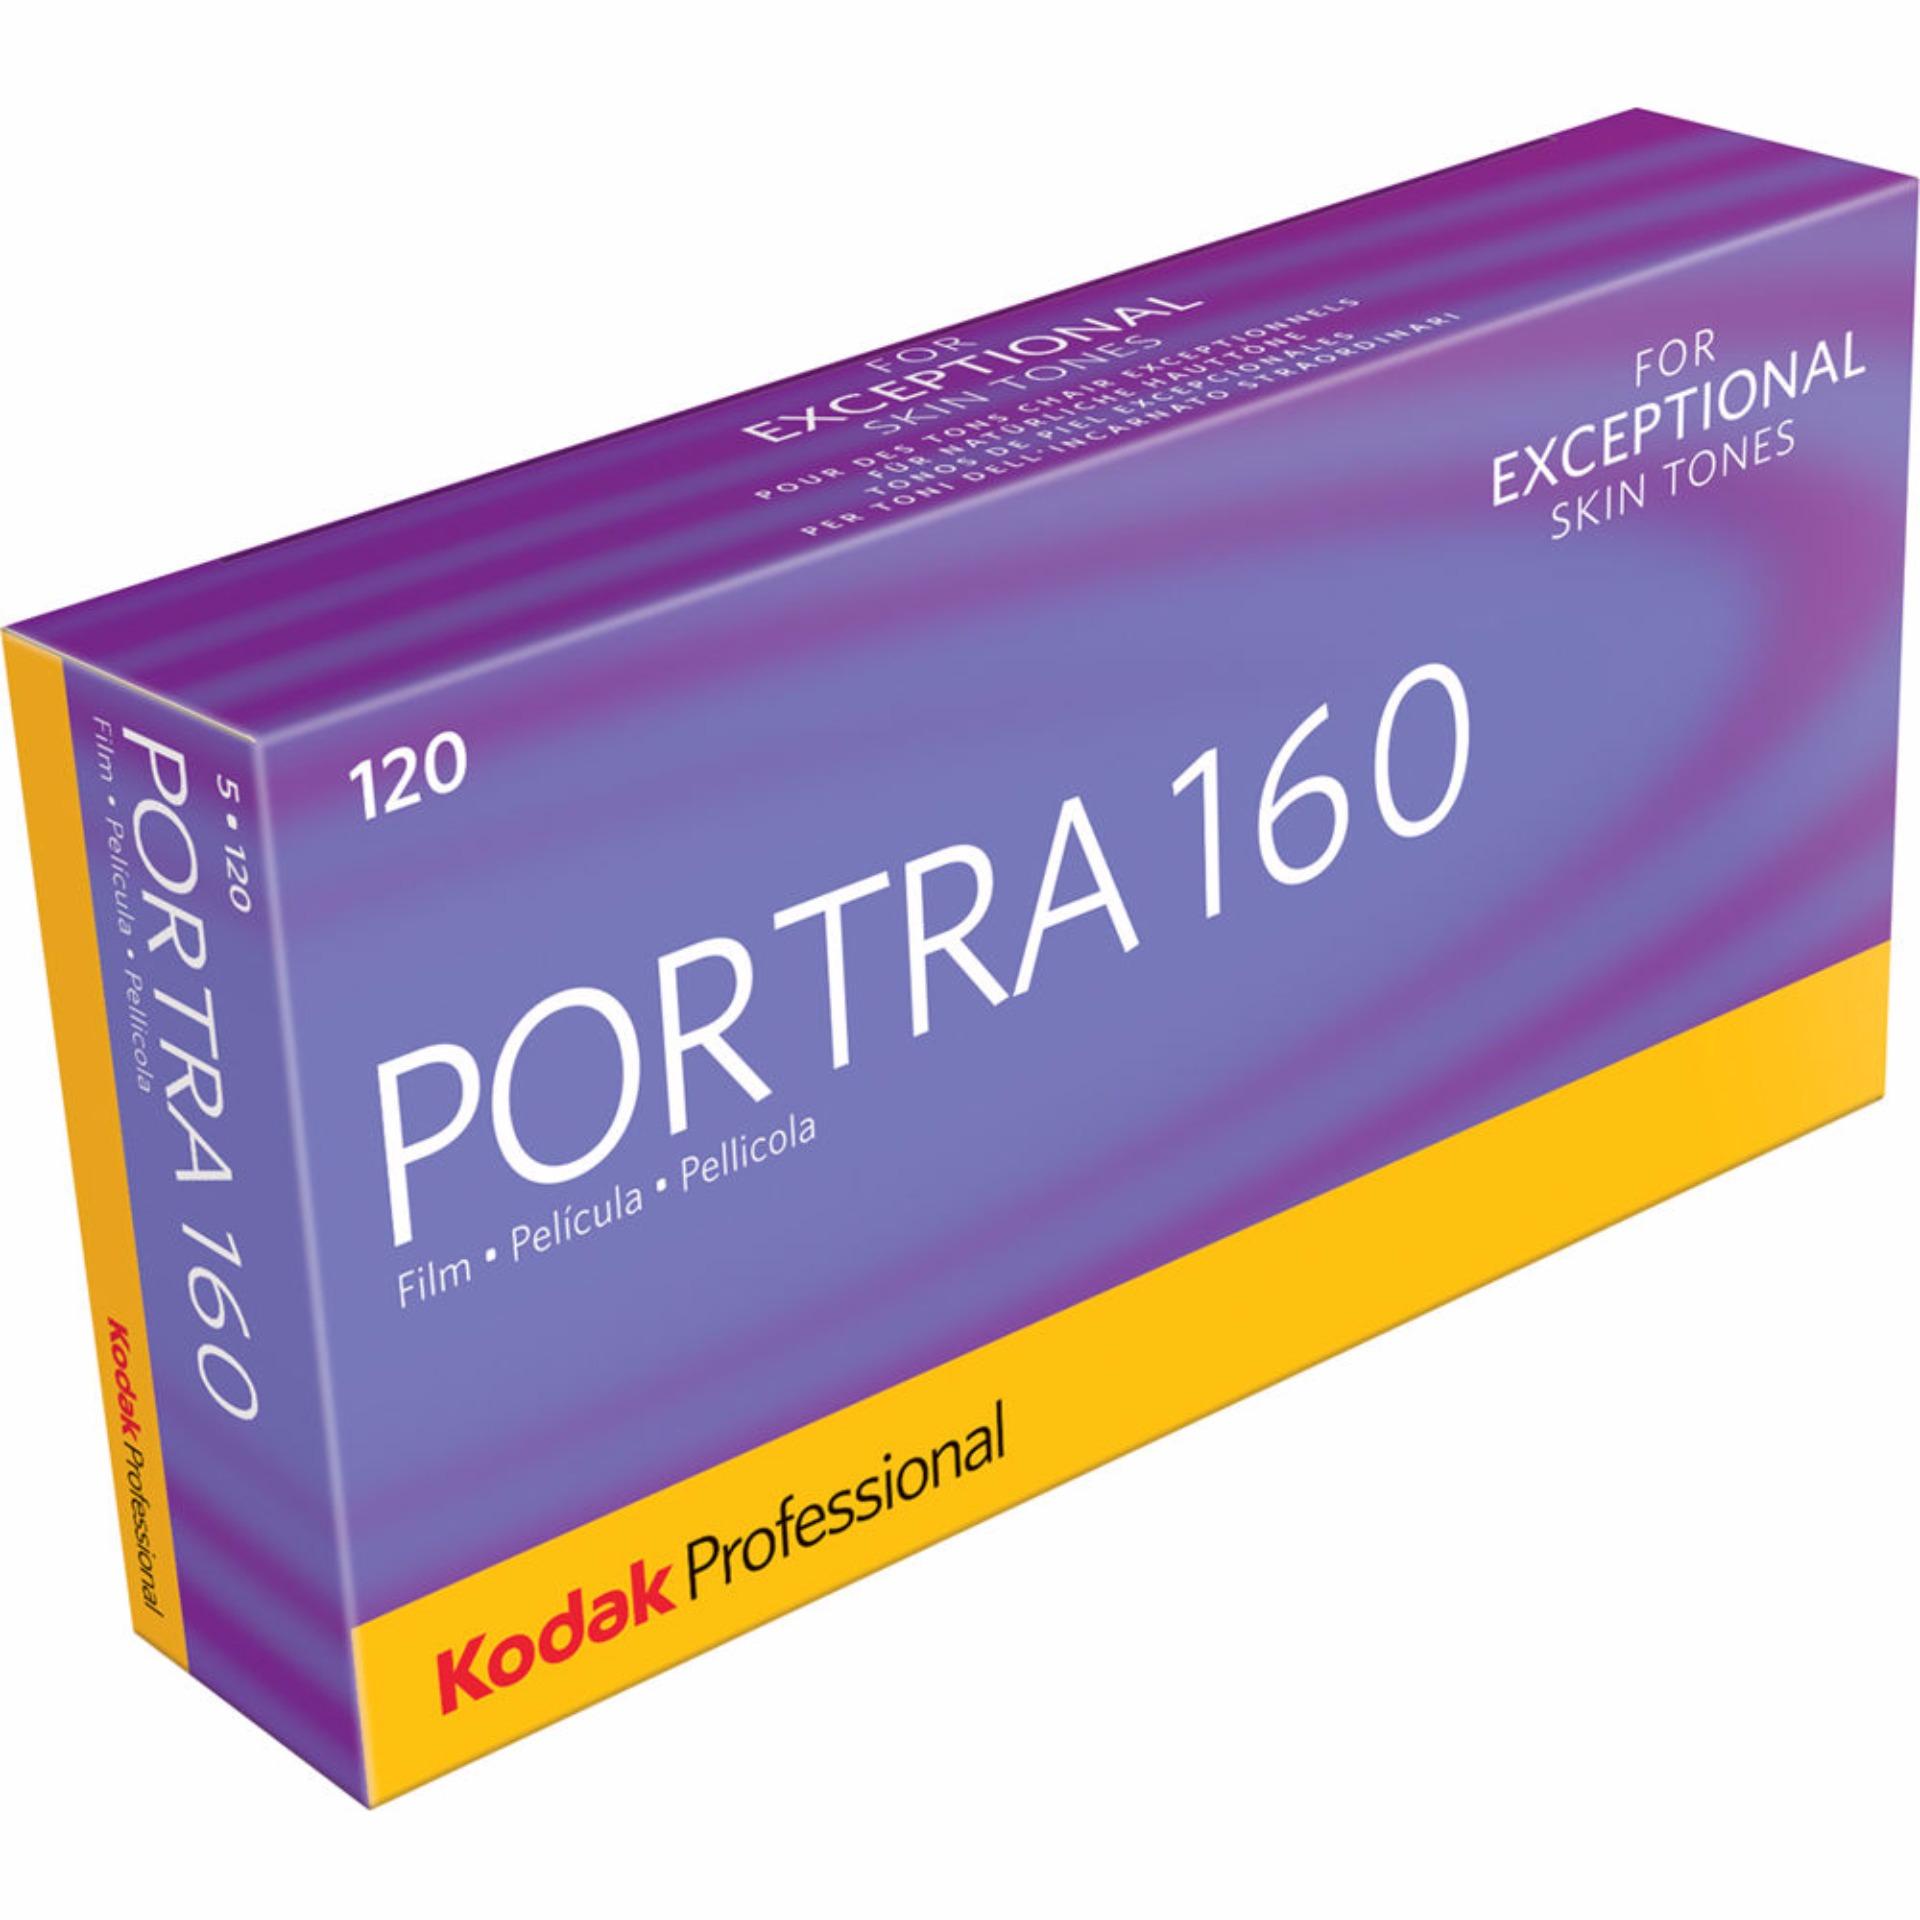 Kodak Portra 160 (120)